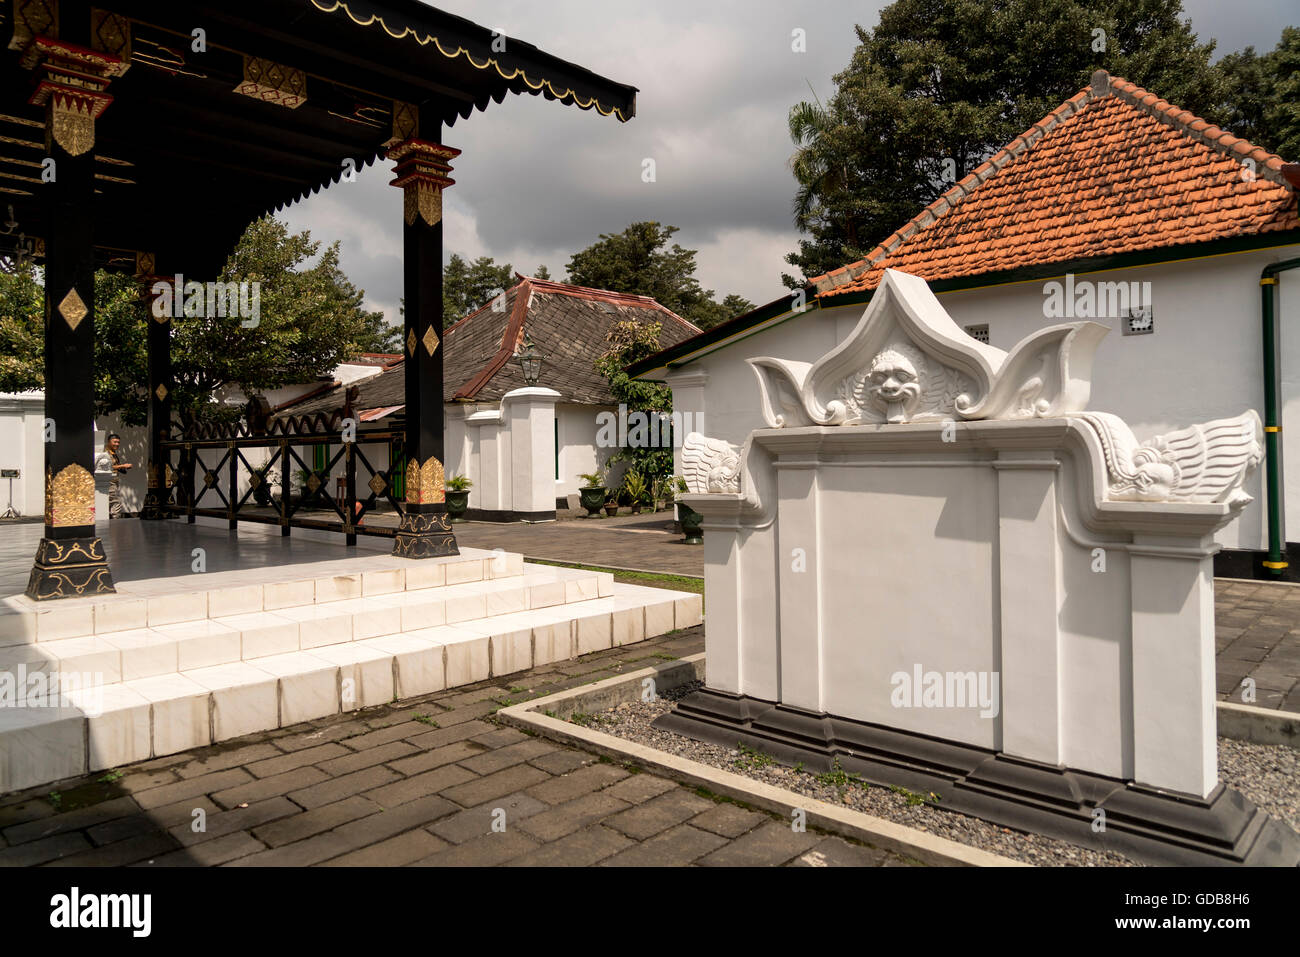 El Palacio del Sultán o Kraton, Yogyakarta, Java, Indonesia, Asia Foto de stock